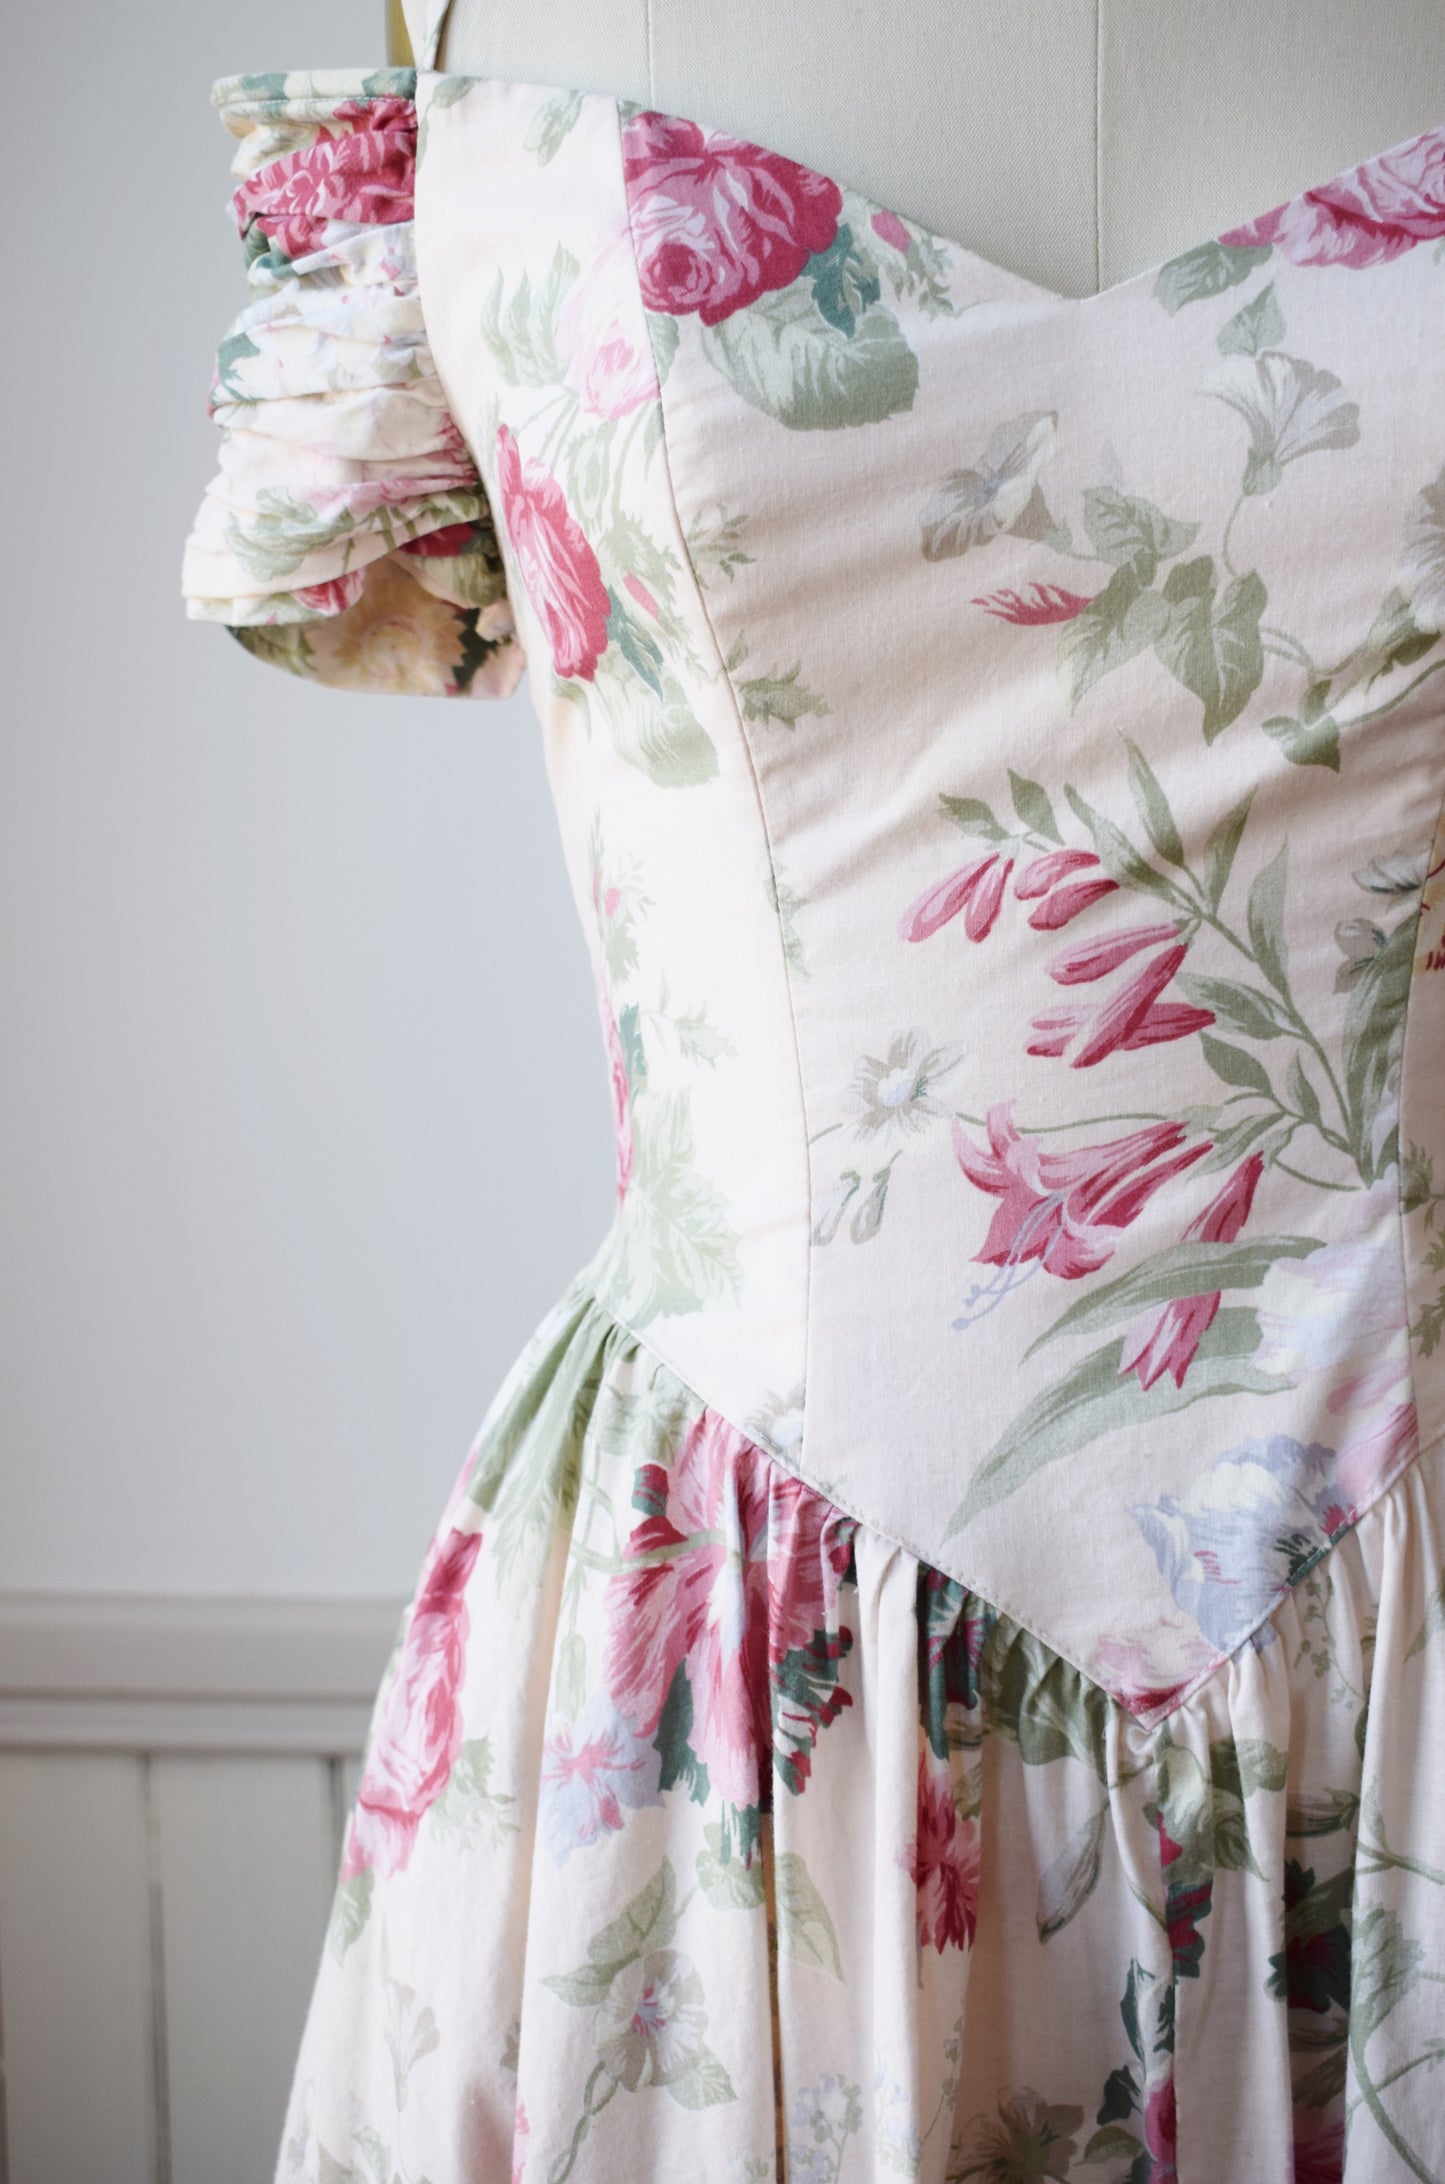 1980s Romantic Floral Dress by Karin Stevens | XS/S